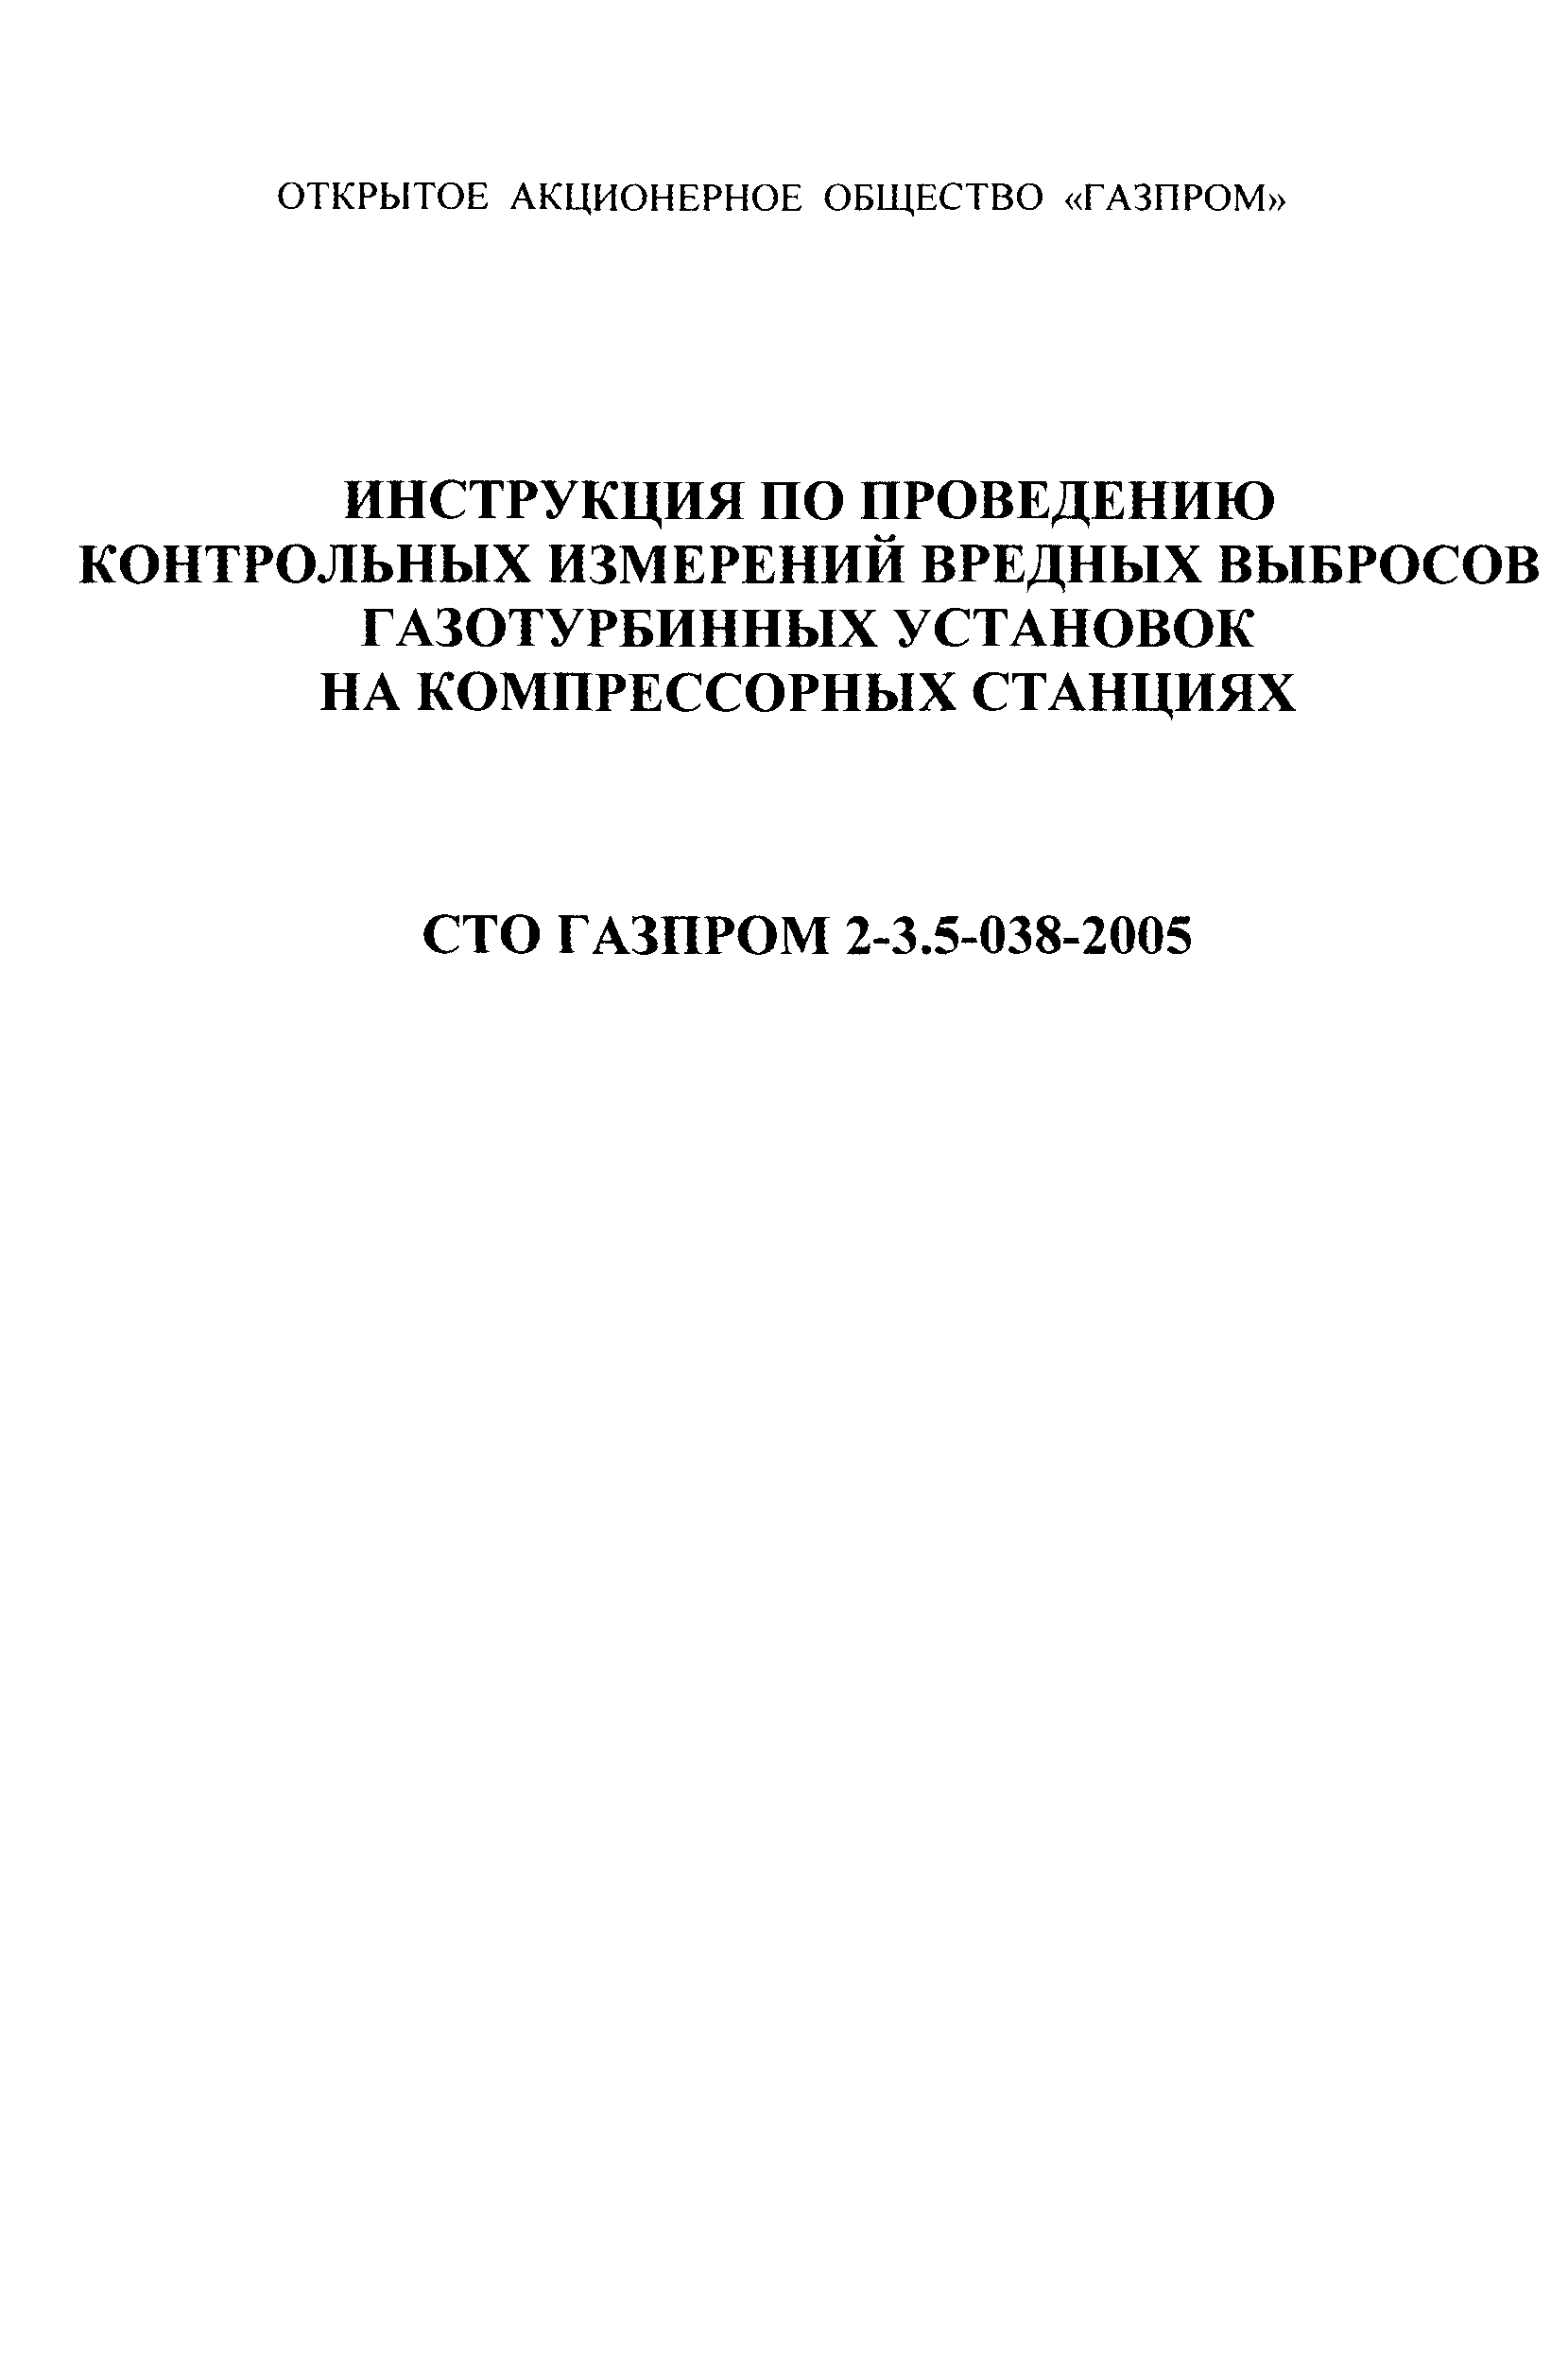 СТО Газпром 2-3.5-038-2005